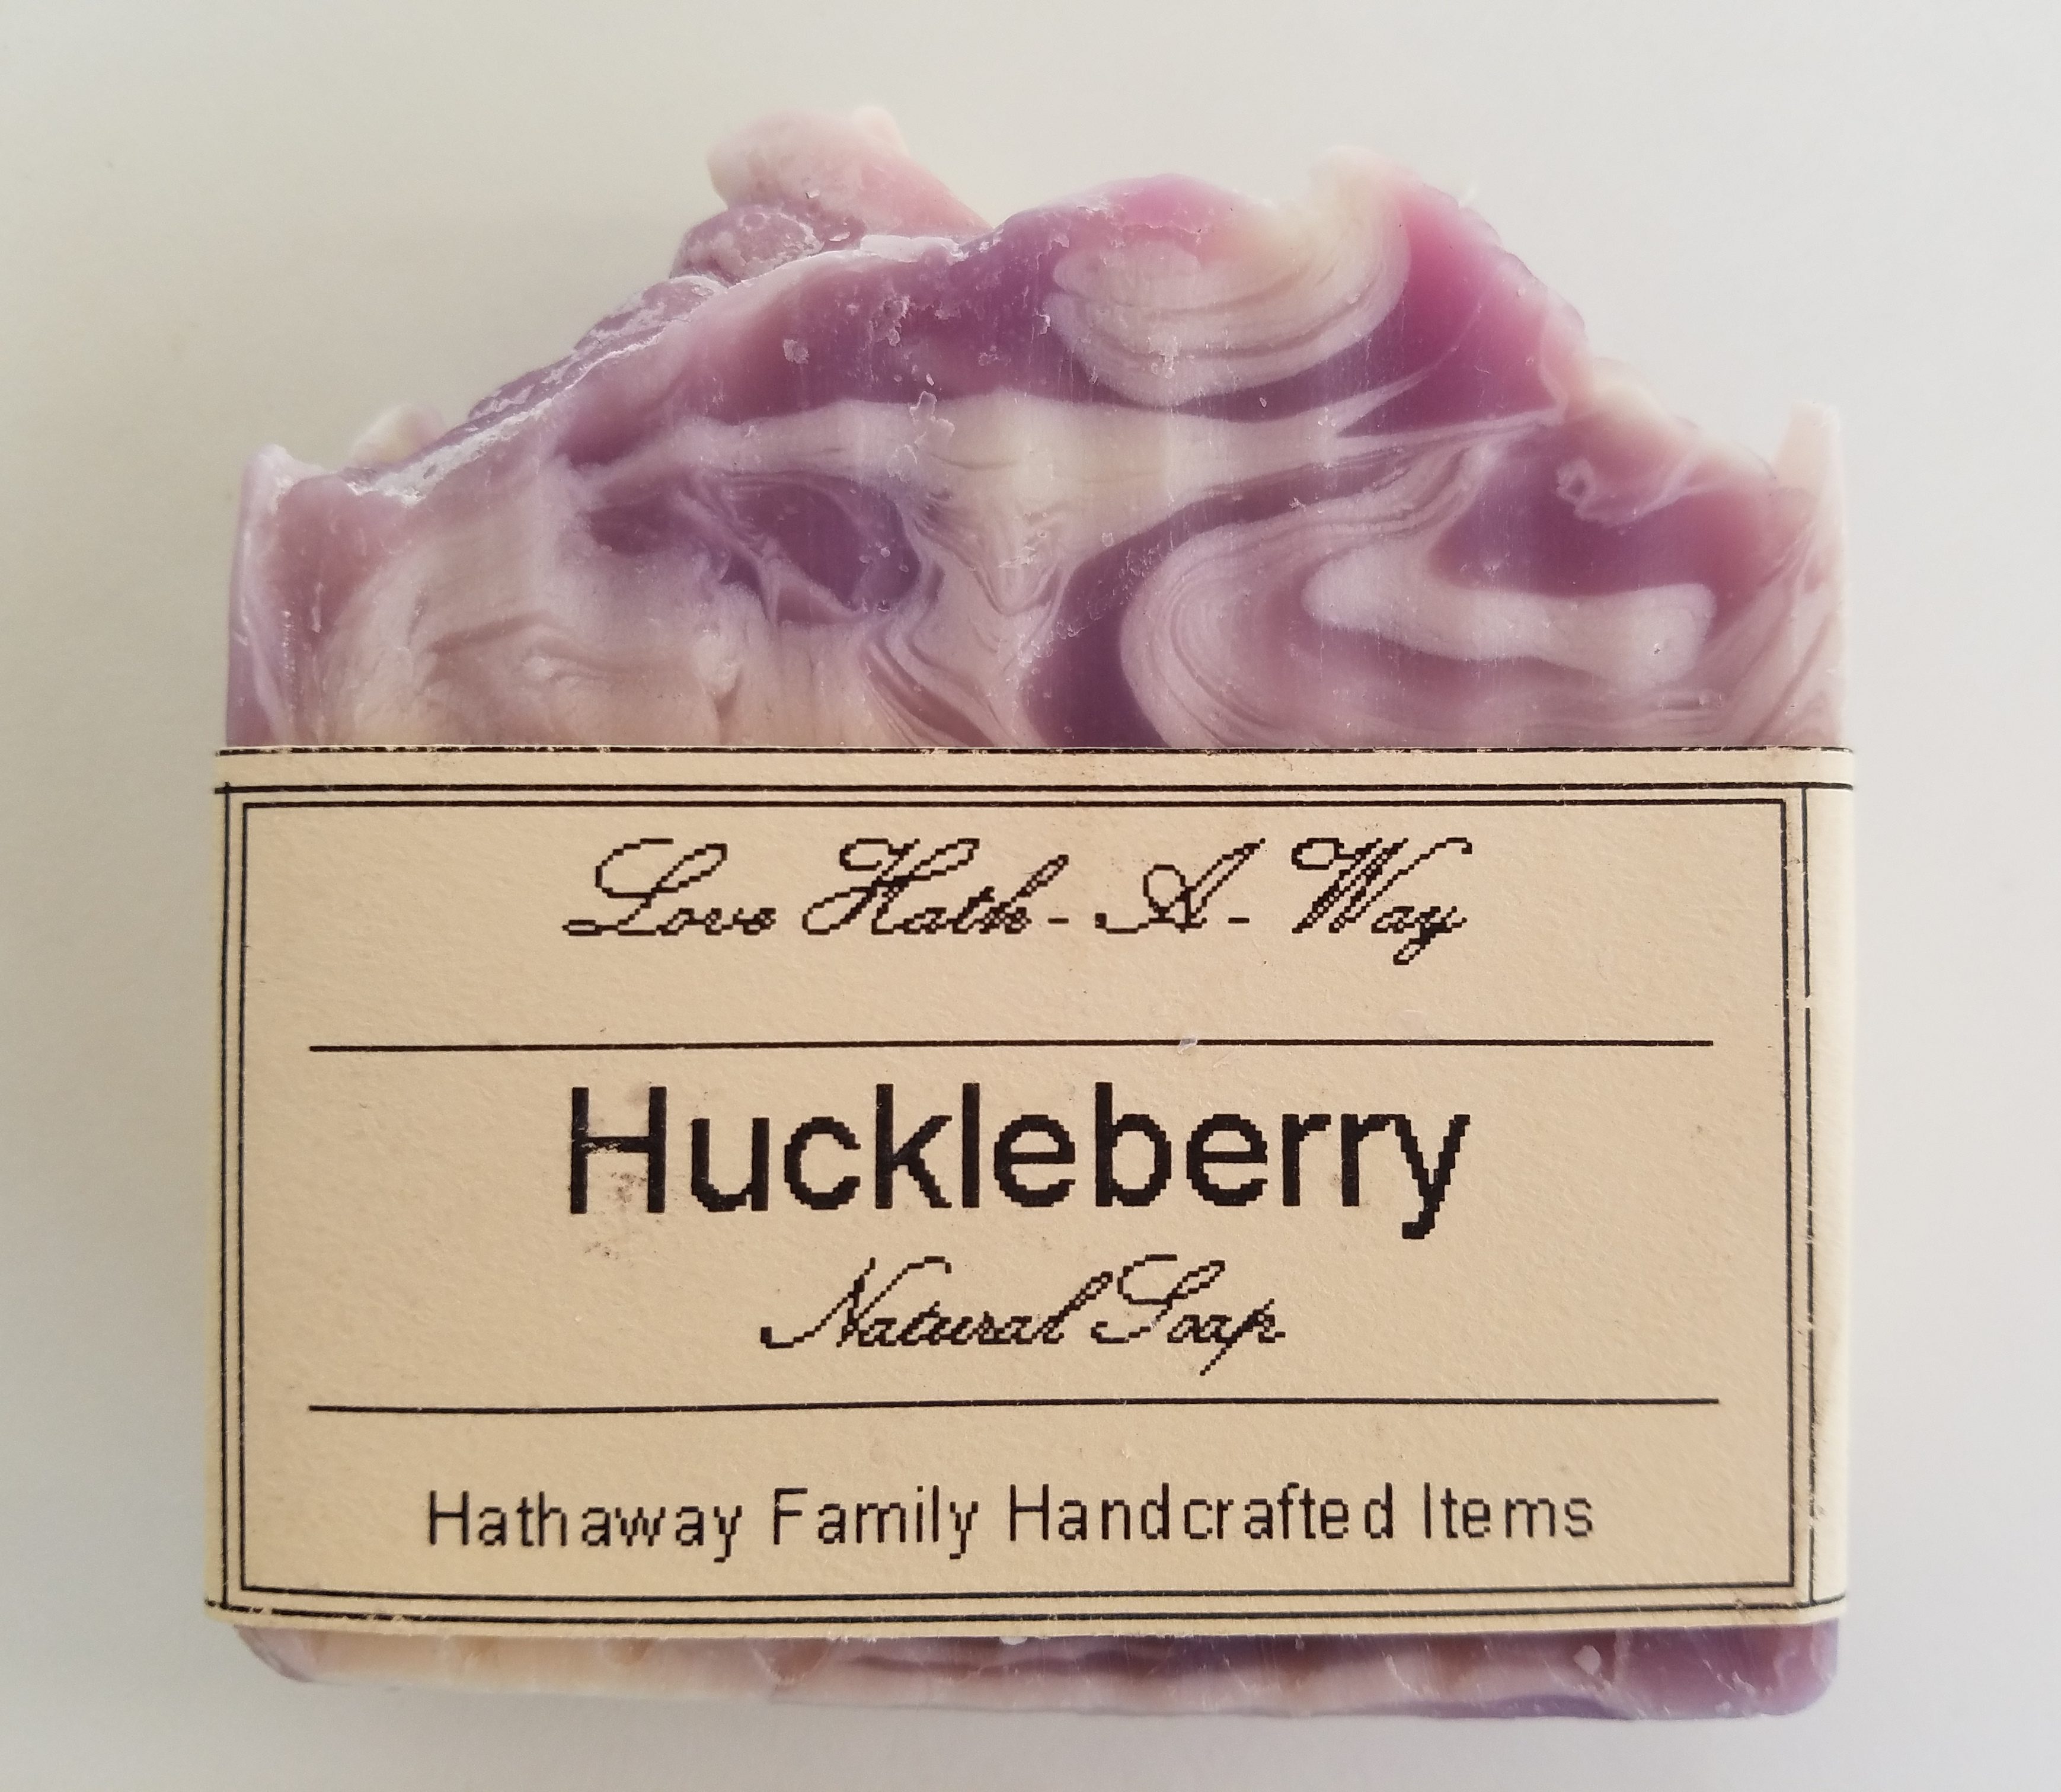 Huckleberry Soap